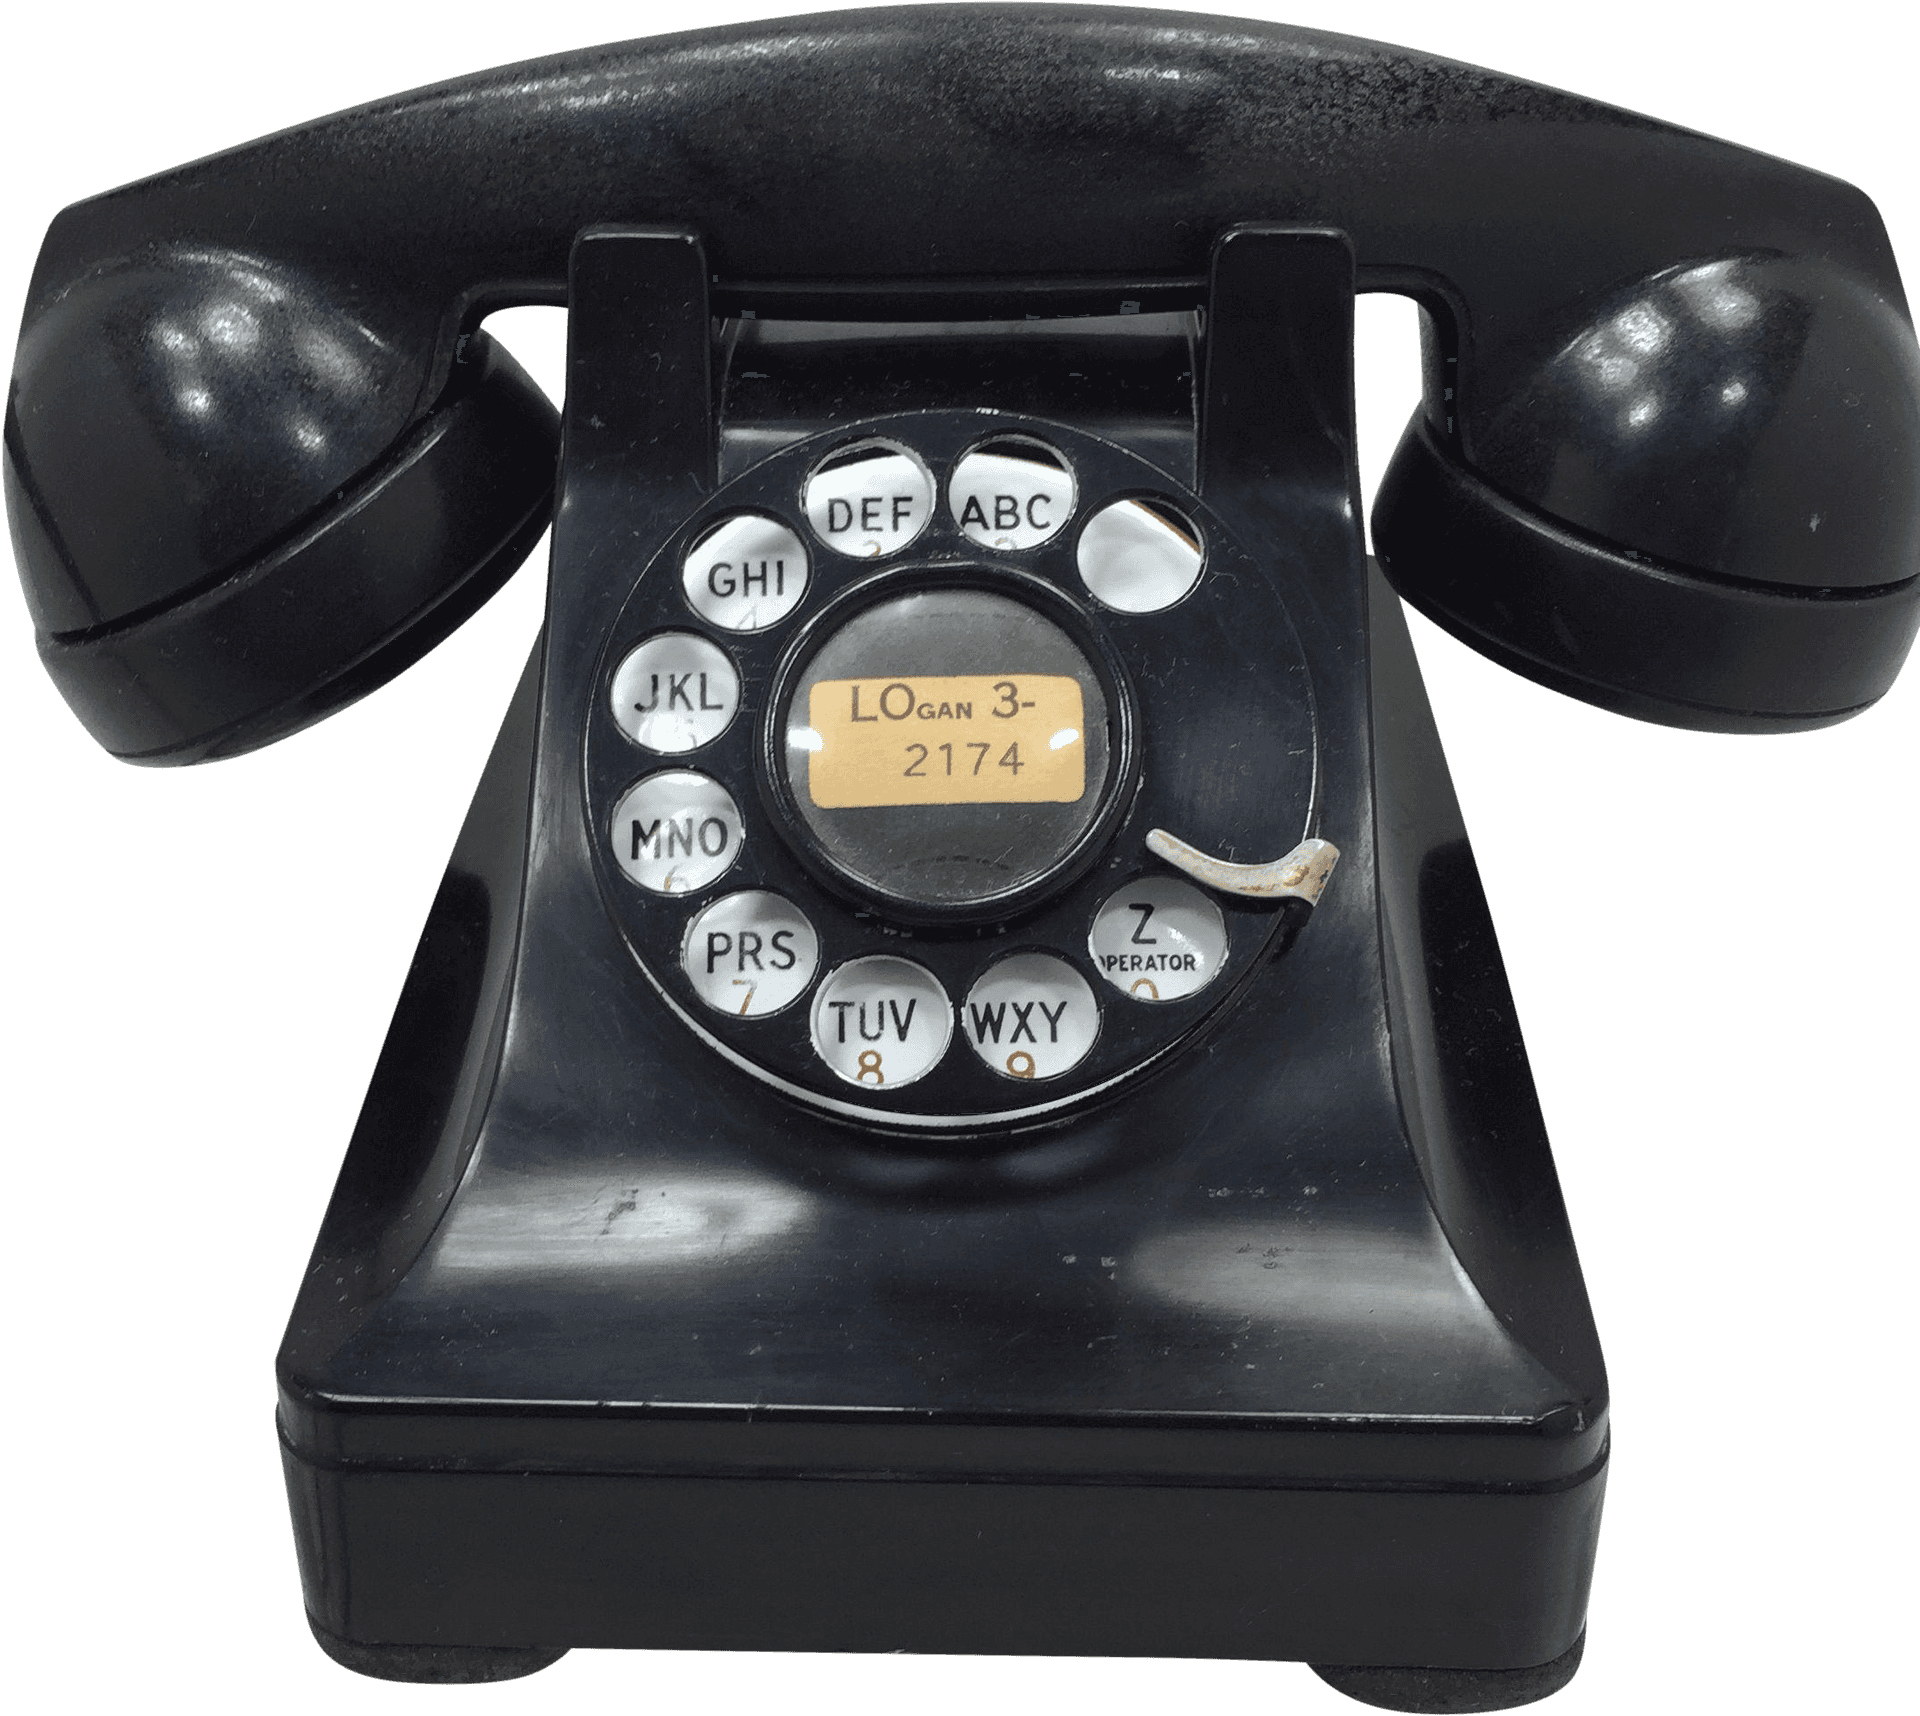 Vintage Black Rotary Telephone PNG